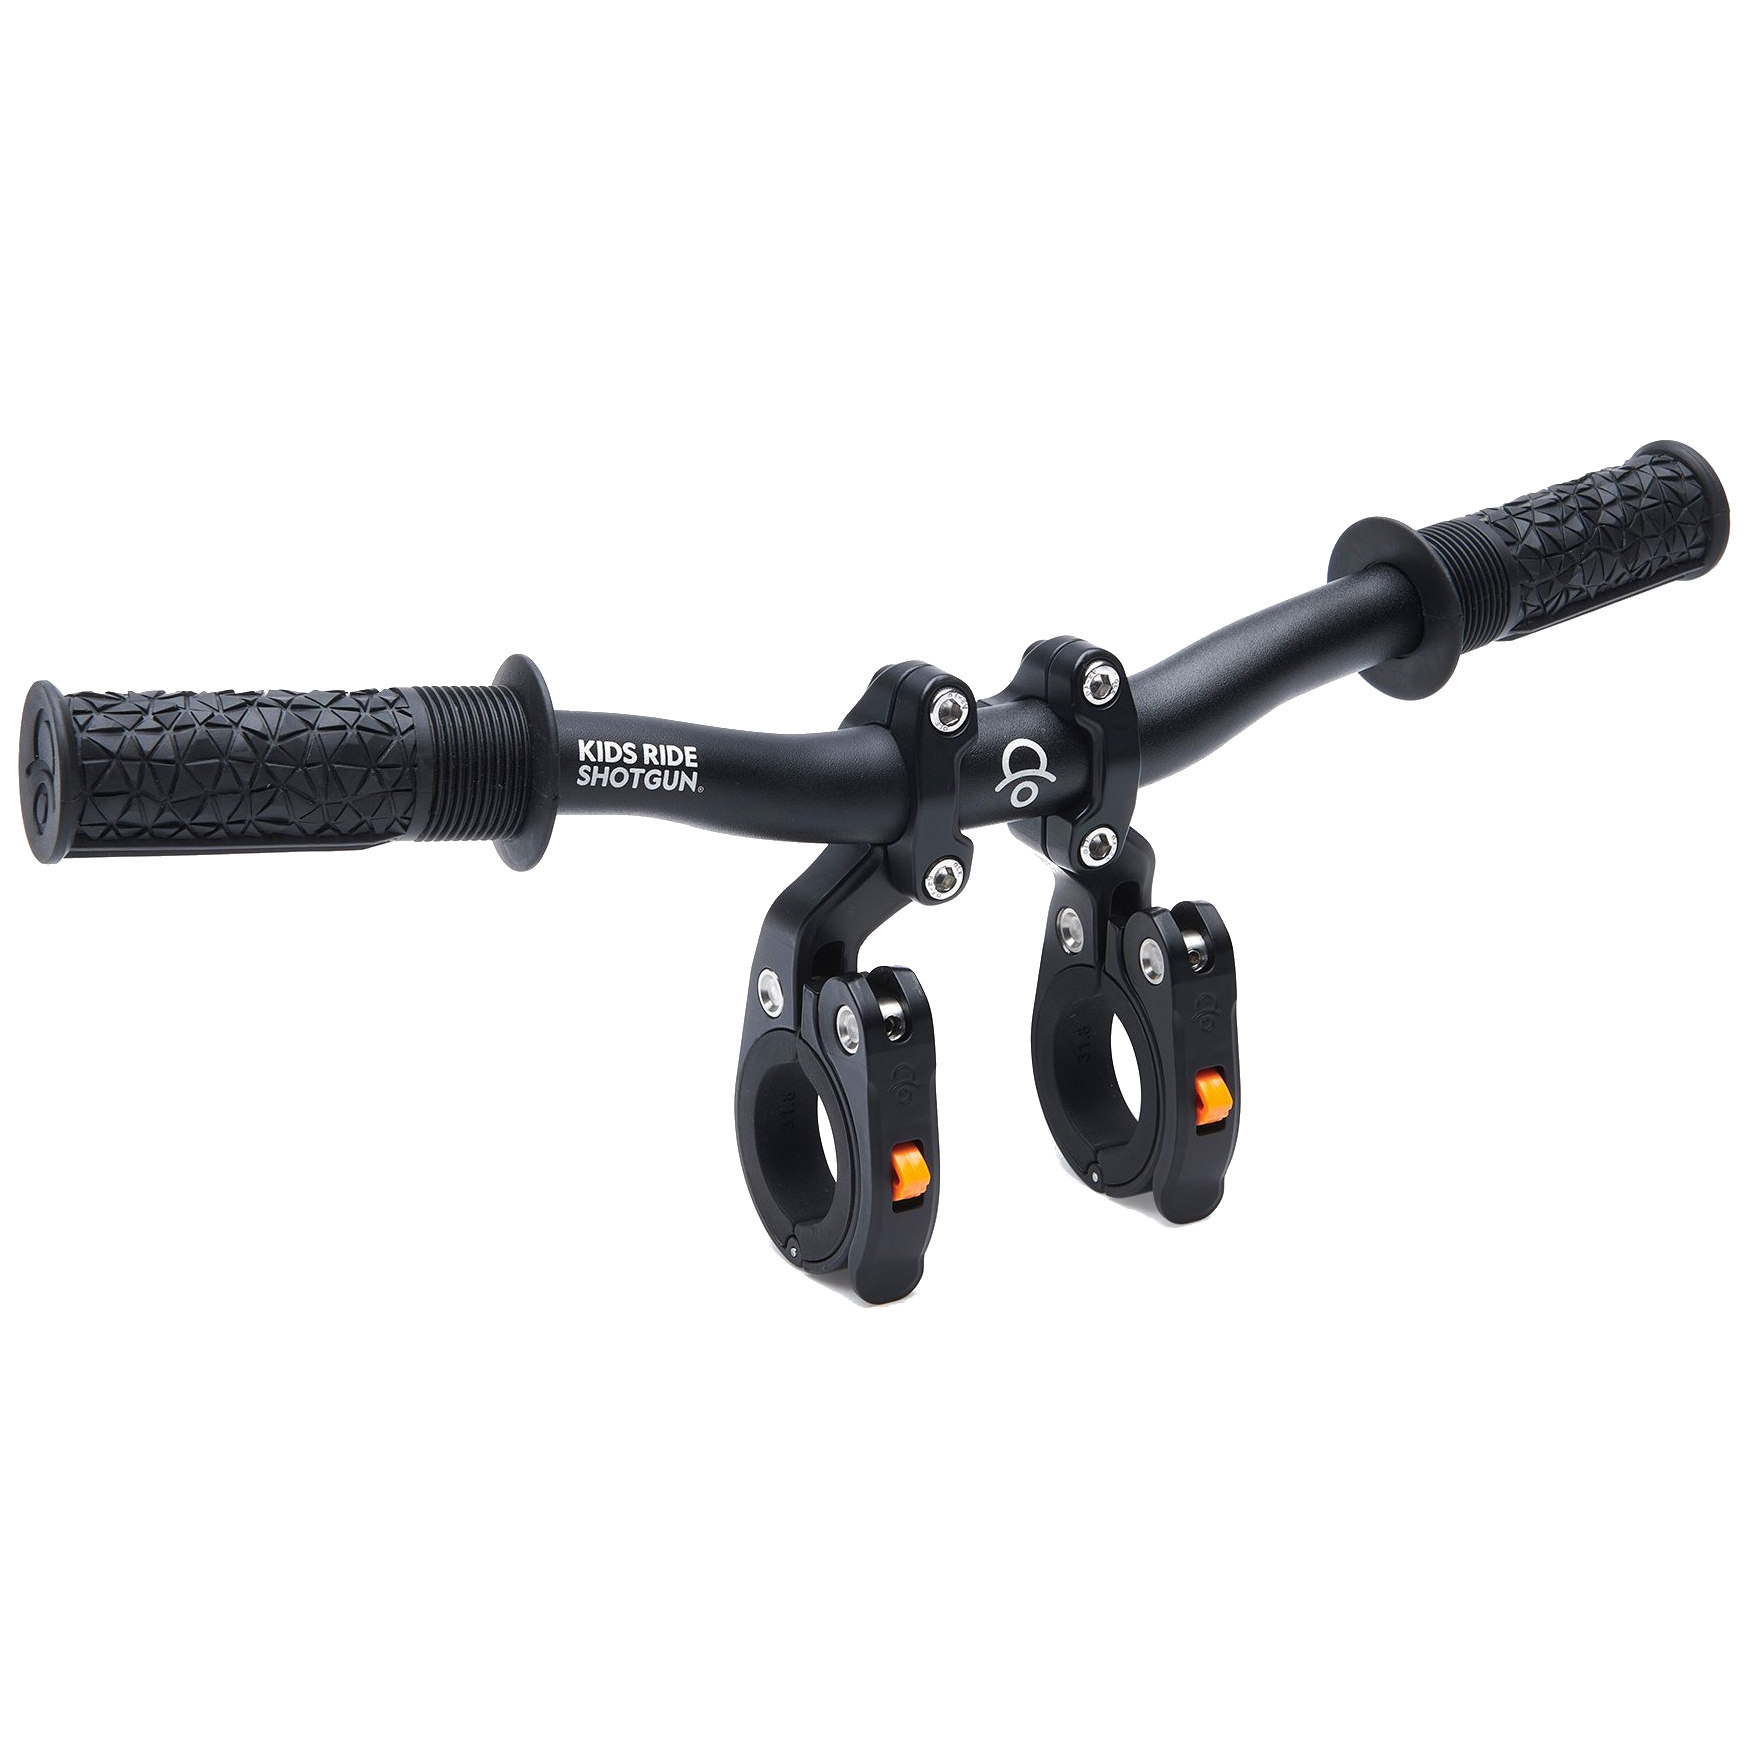 Productfoto van Shotgun Pro Child Bike Seat Handlebars - black